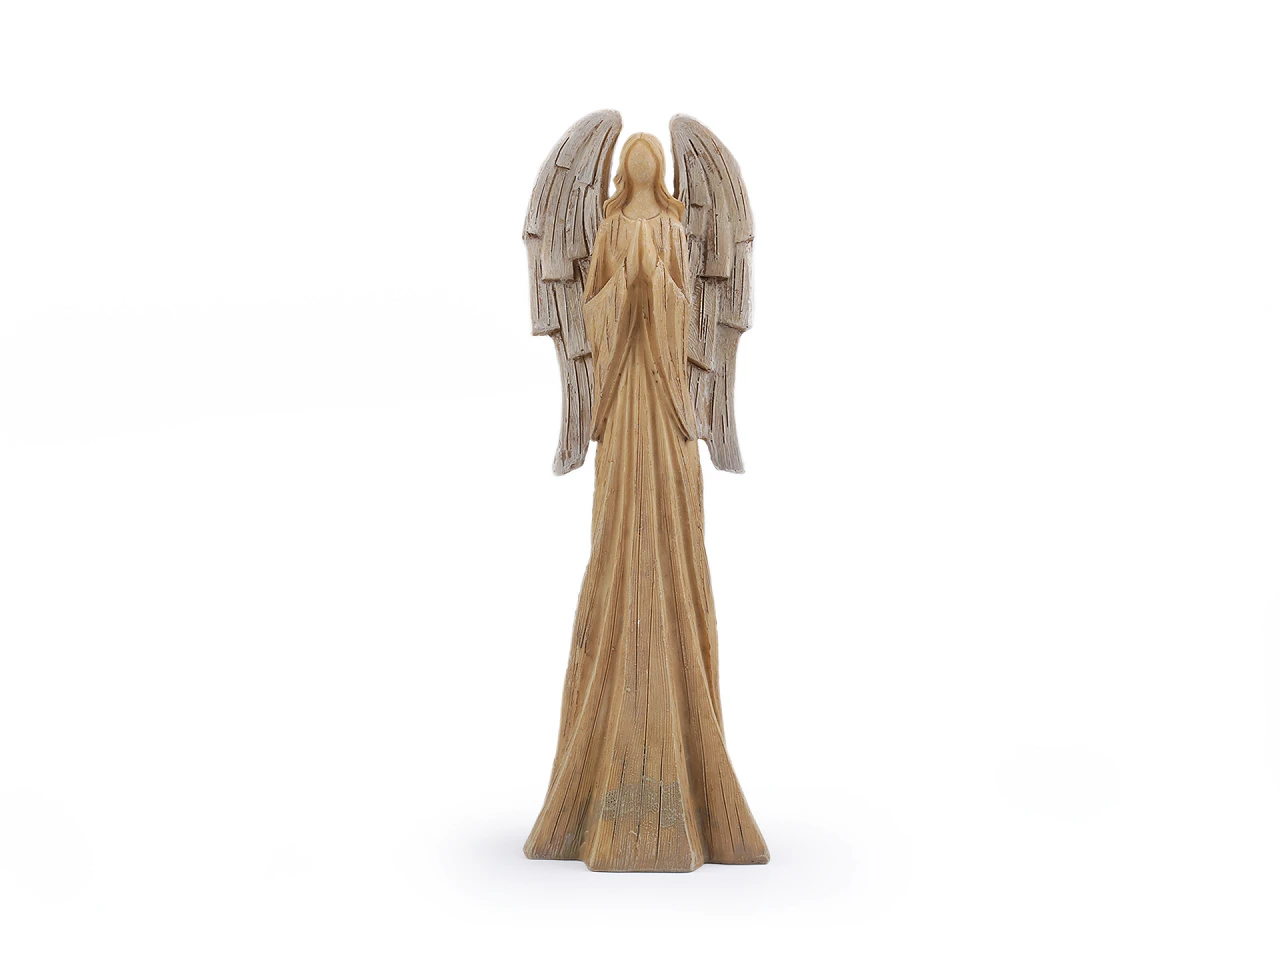 Dekorácia anjel imitácia dreva-1ks